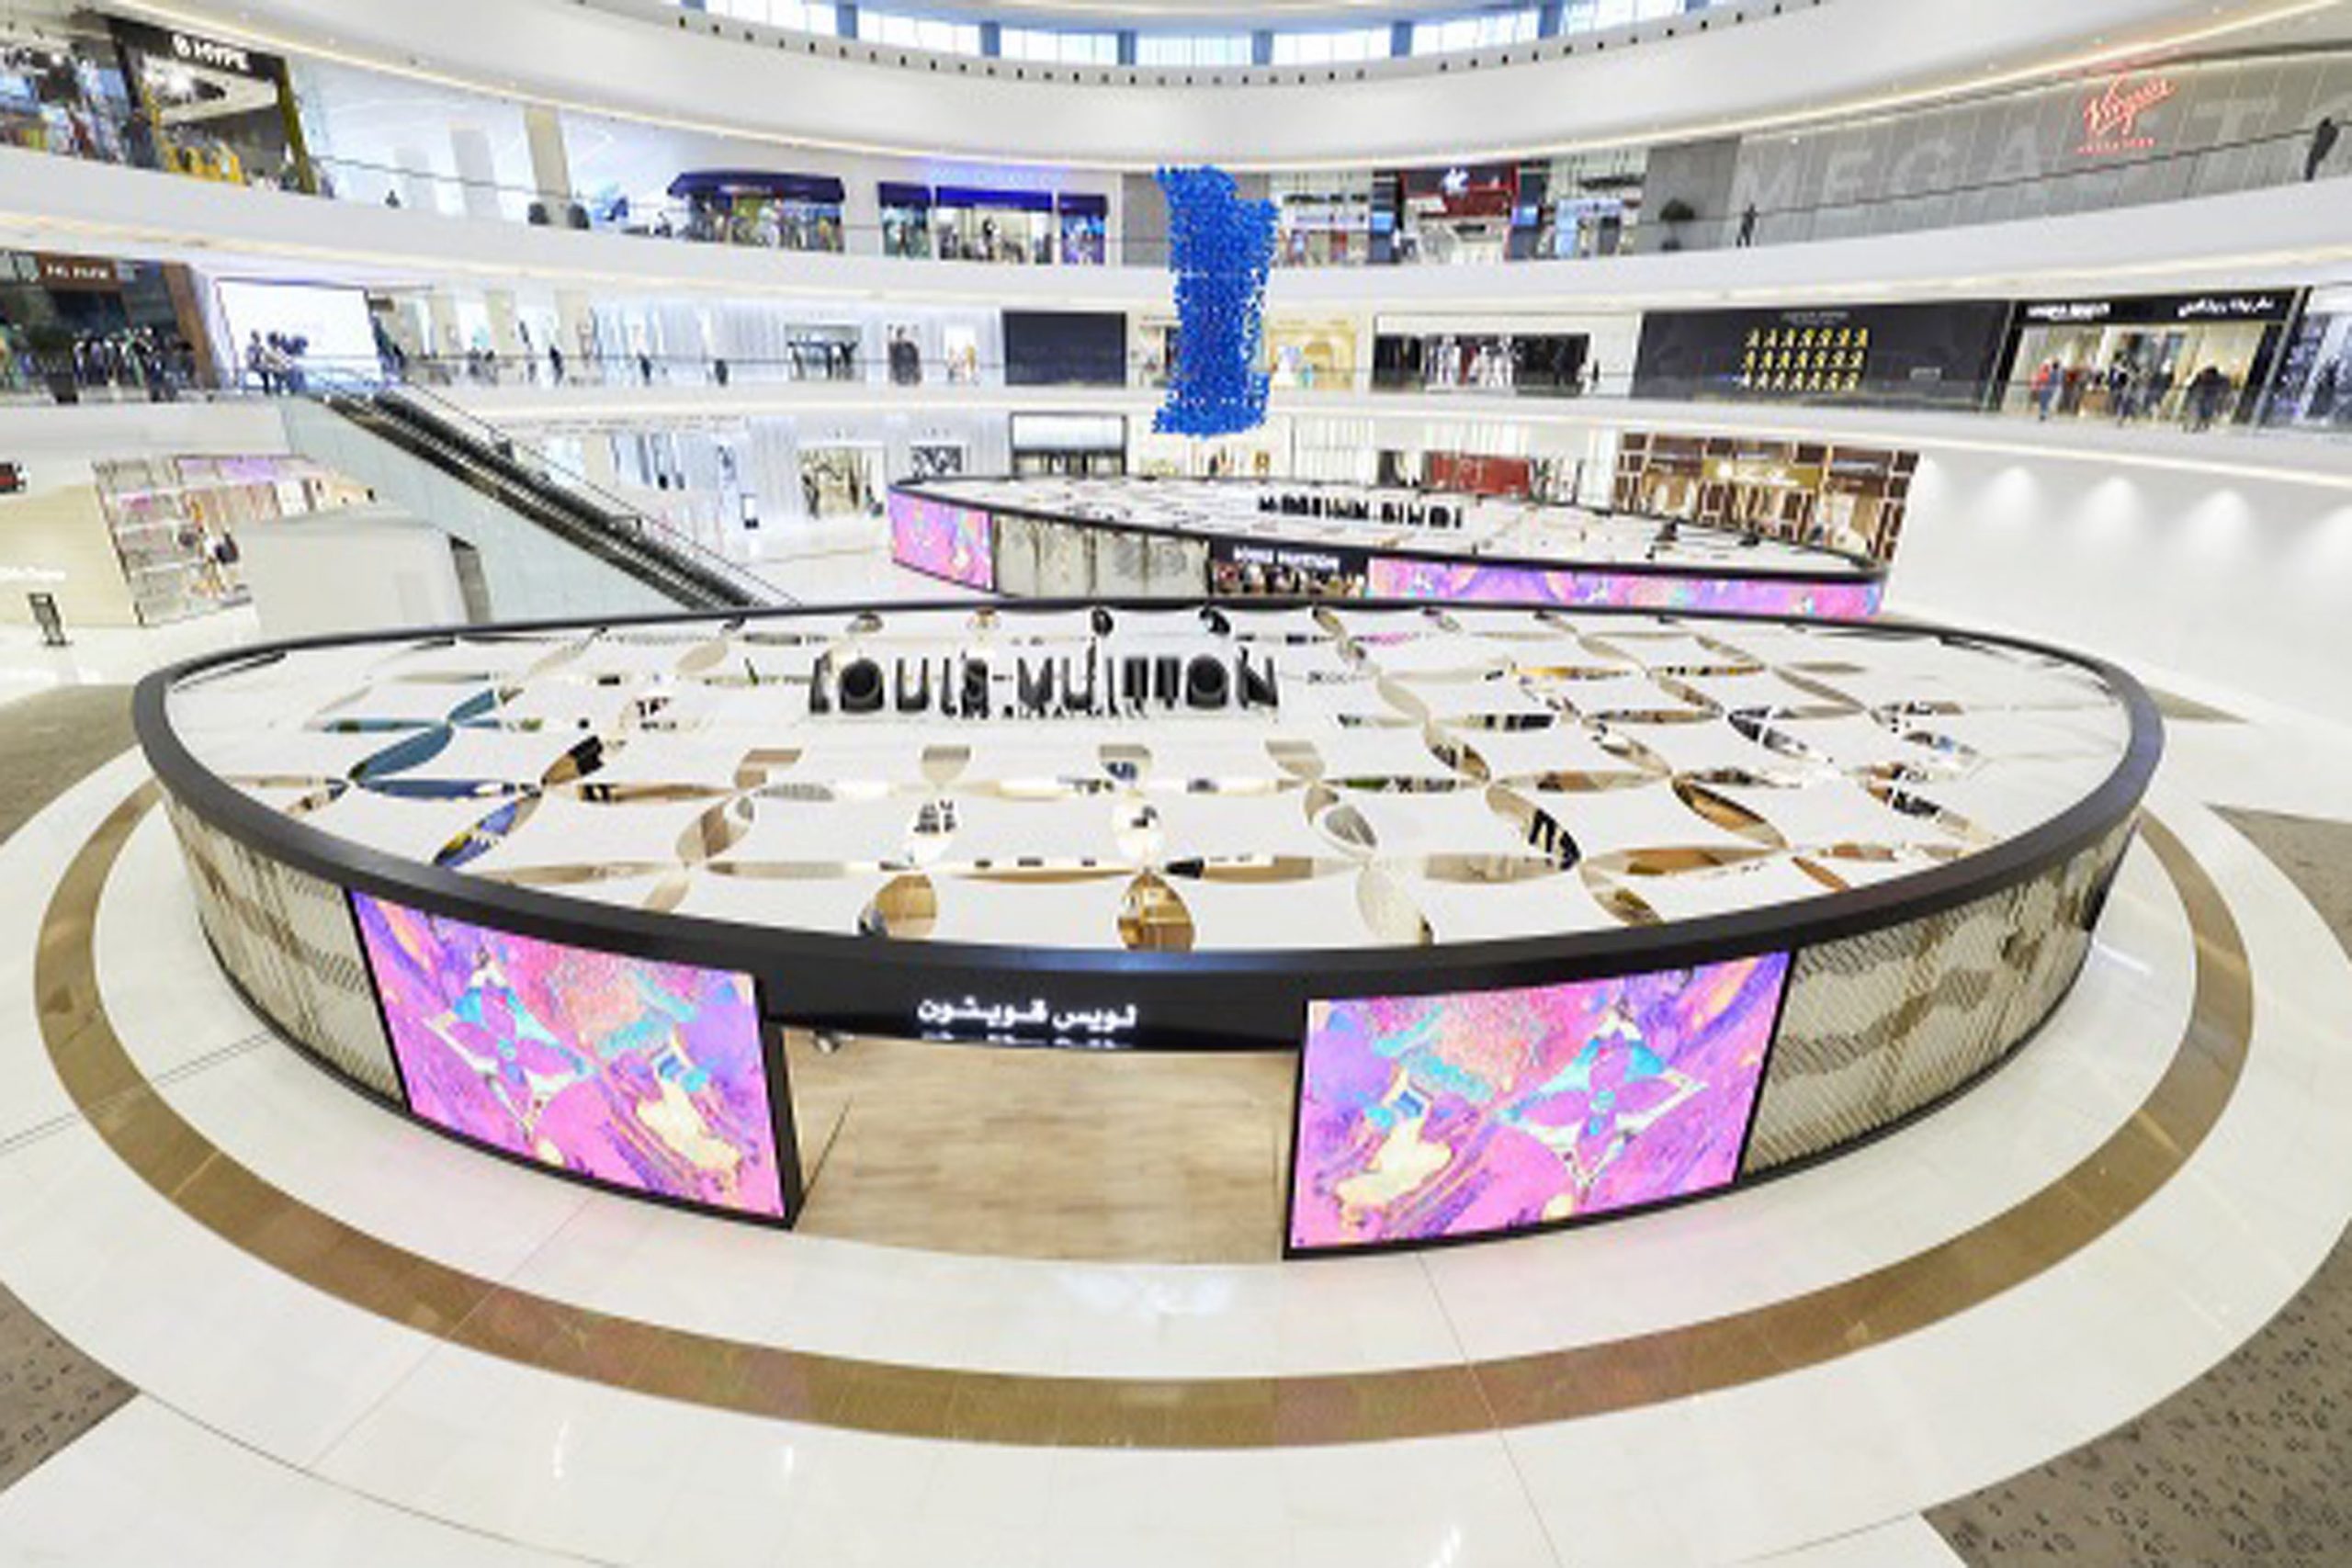 Louis Vuitton Mall Of The Emirates Store in Dubai, United Arab